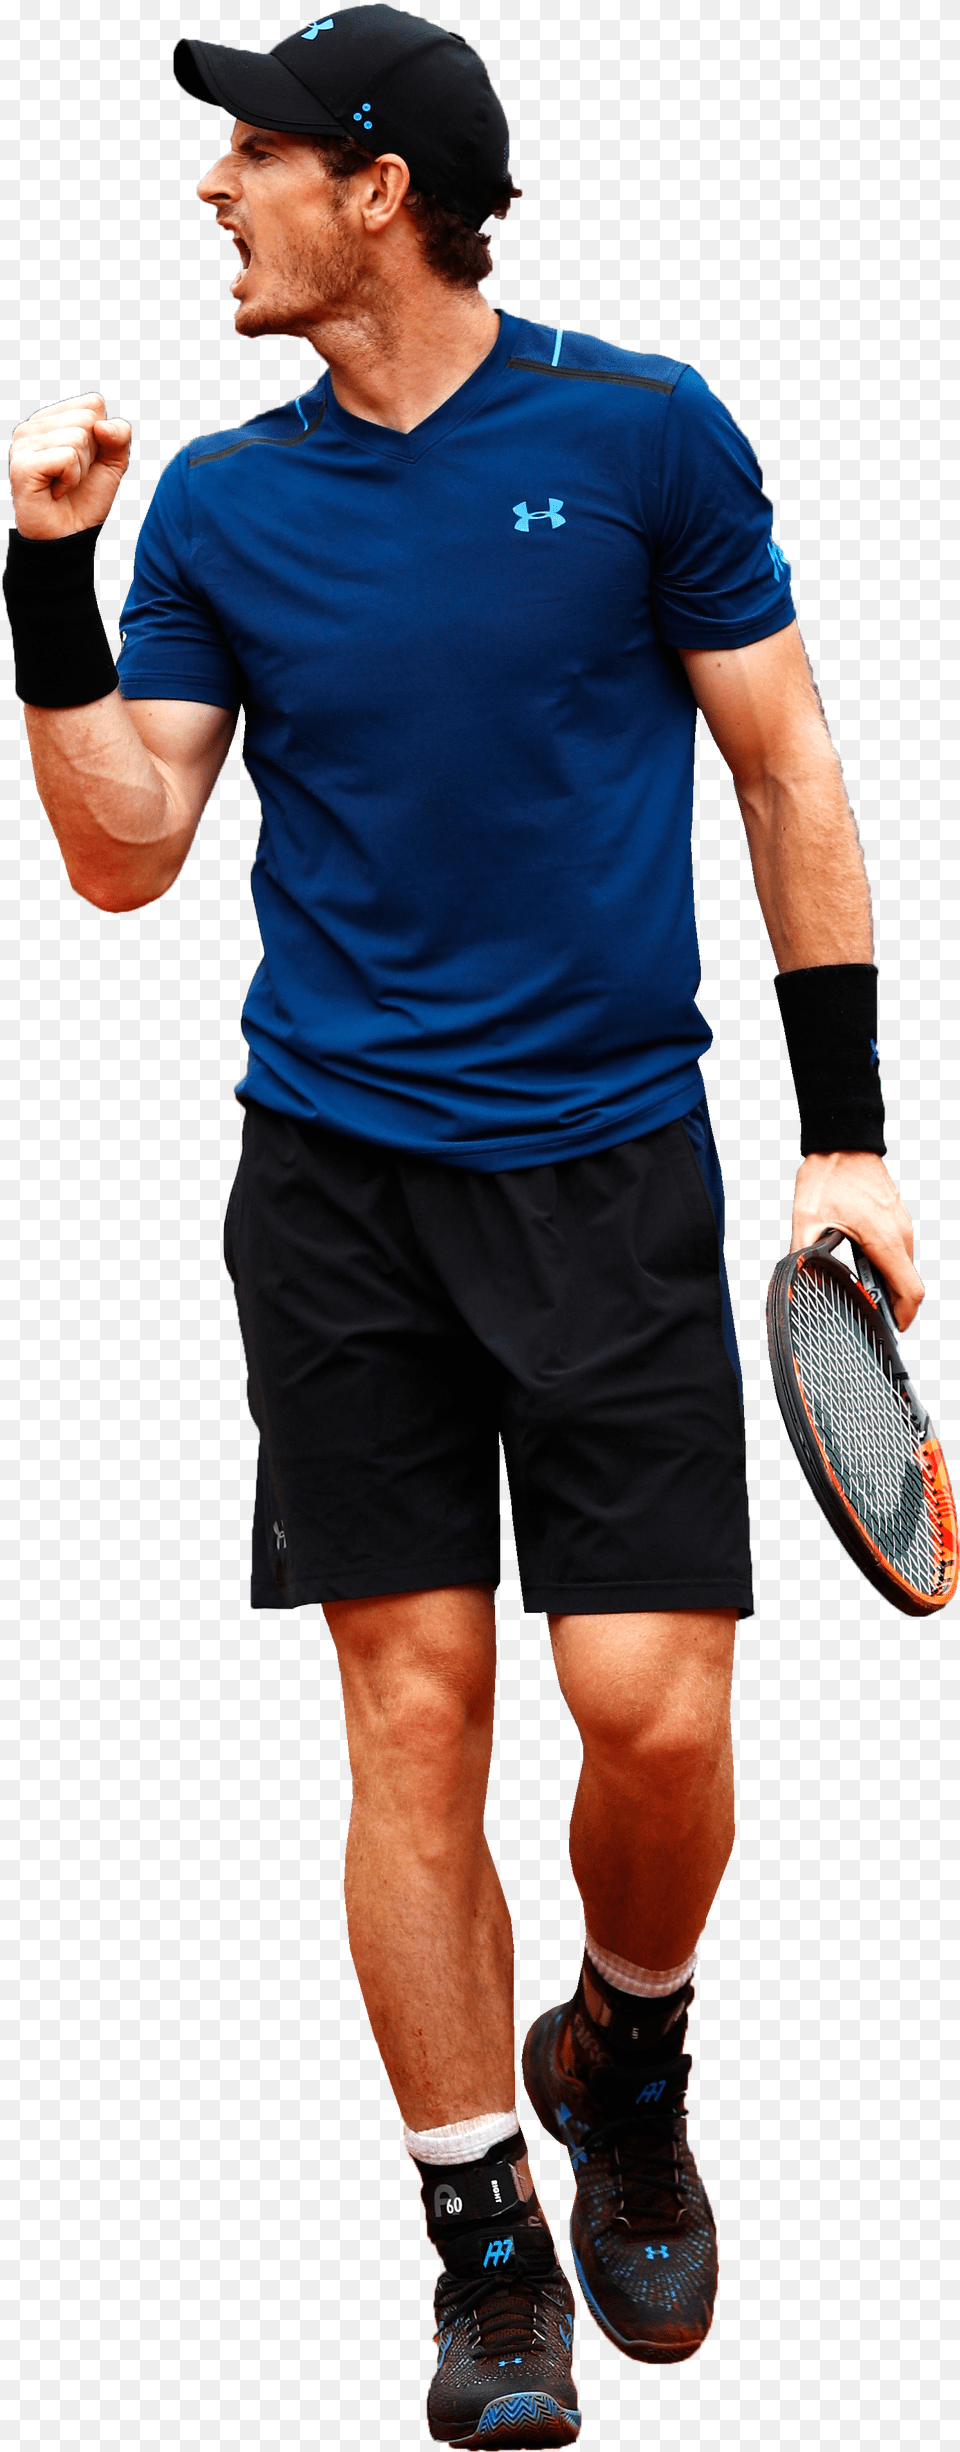 Tennis Player, Footwear, Clothing, Racket, Shorts Png Image